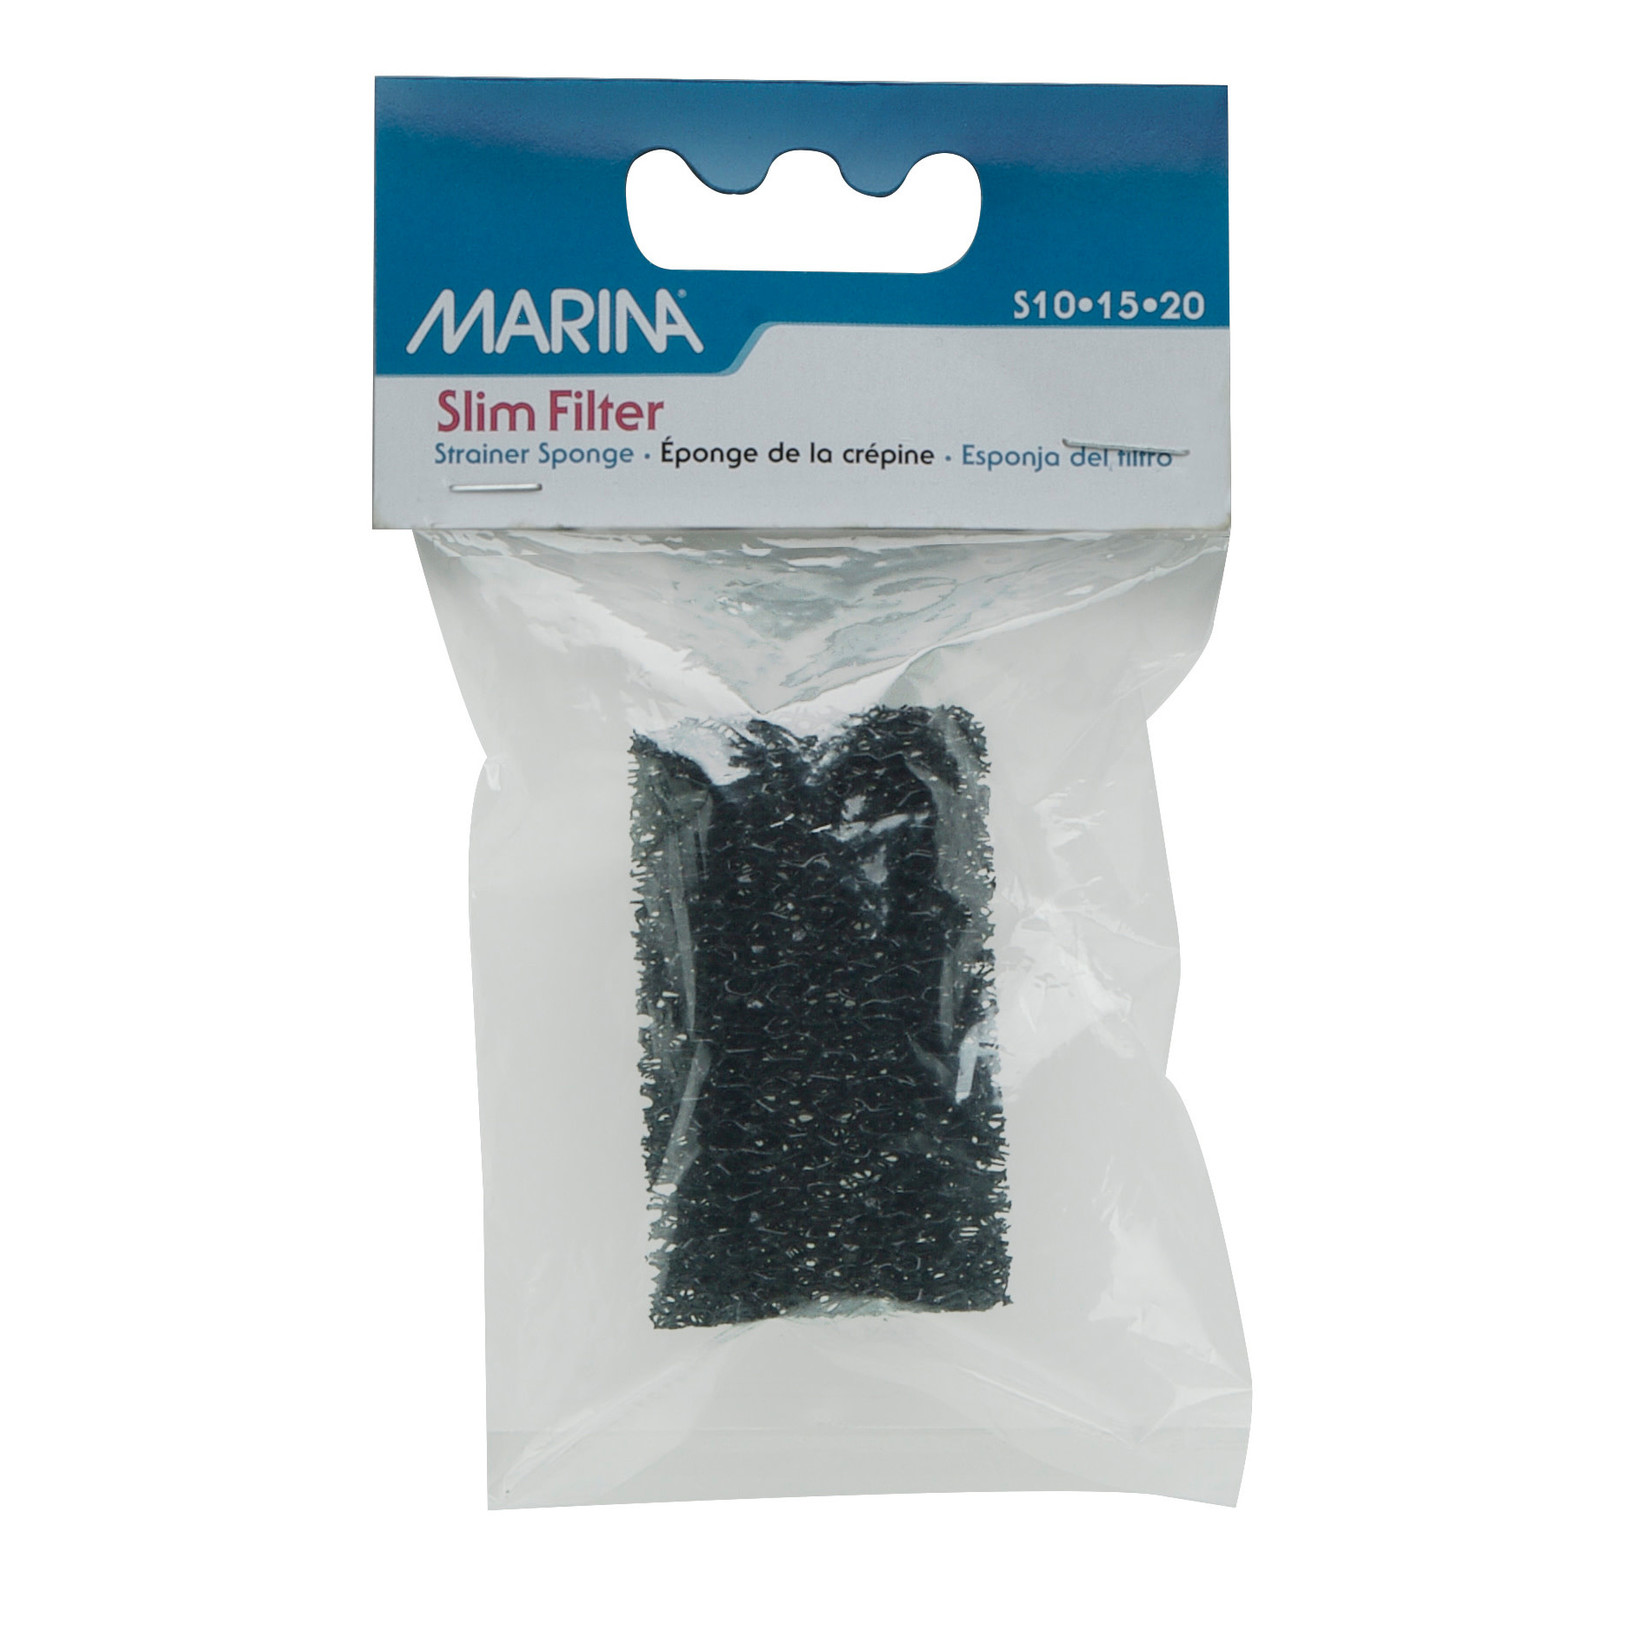 MARINA Marina Slim Filter Replacement Intake Strainer Sponge